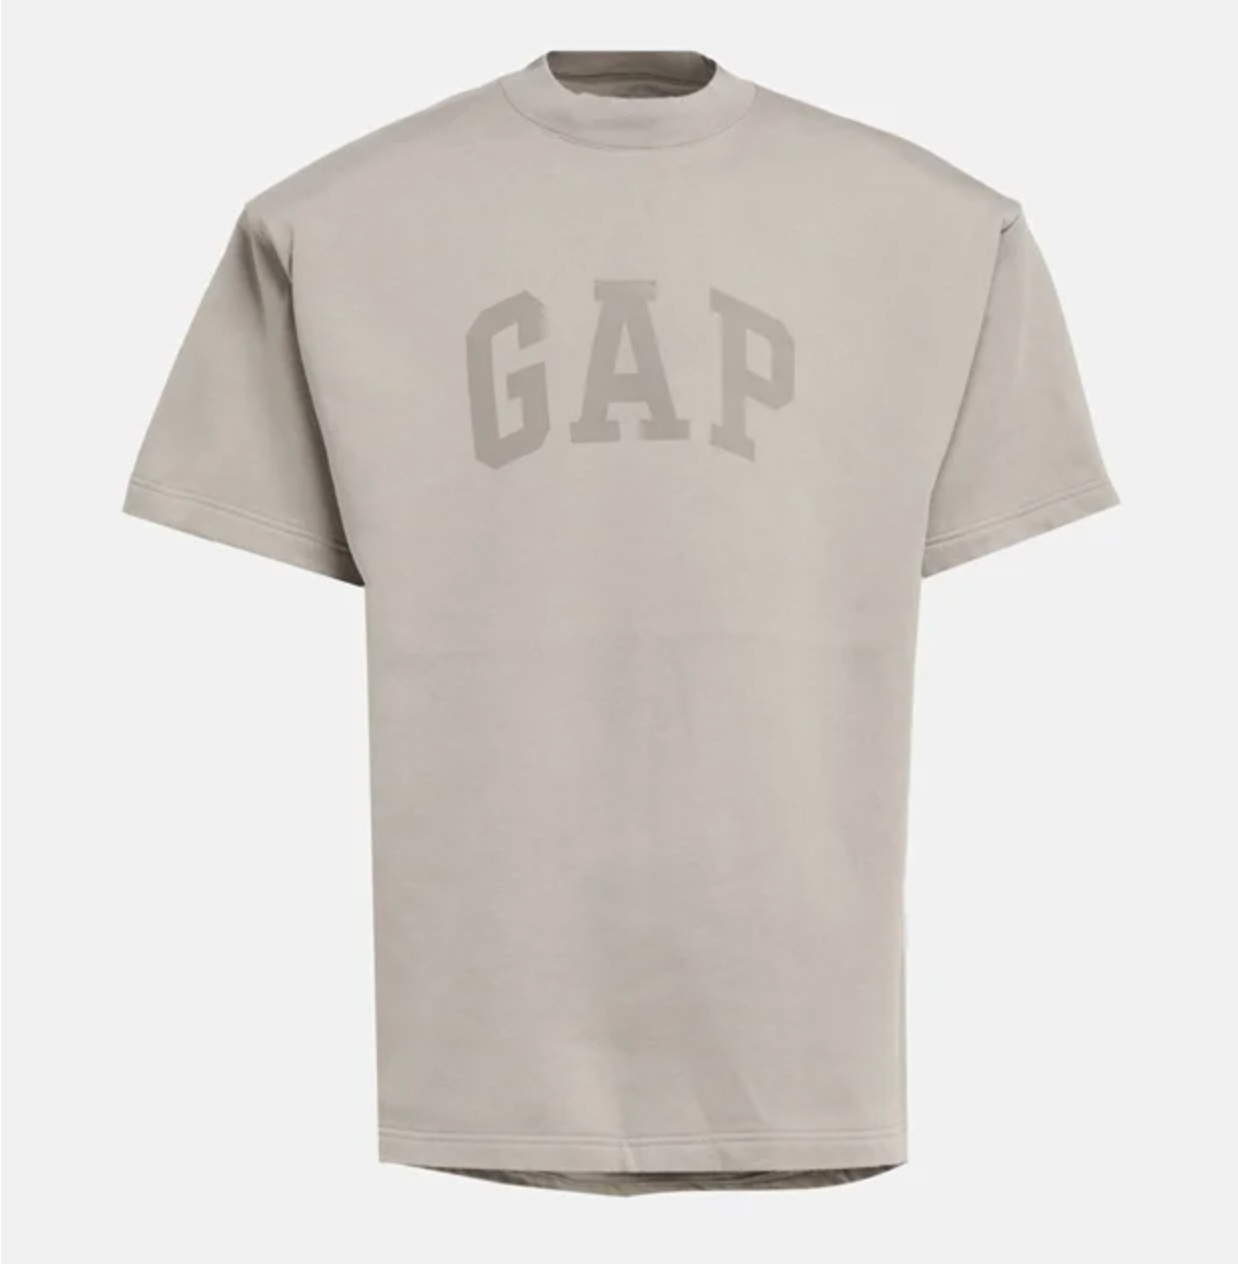 Yeezy Gap Engineered by Balenciaga T-Shirt Dark Grey Front Lodz Polska